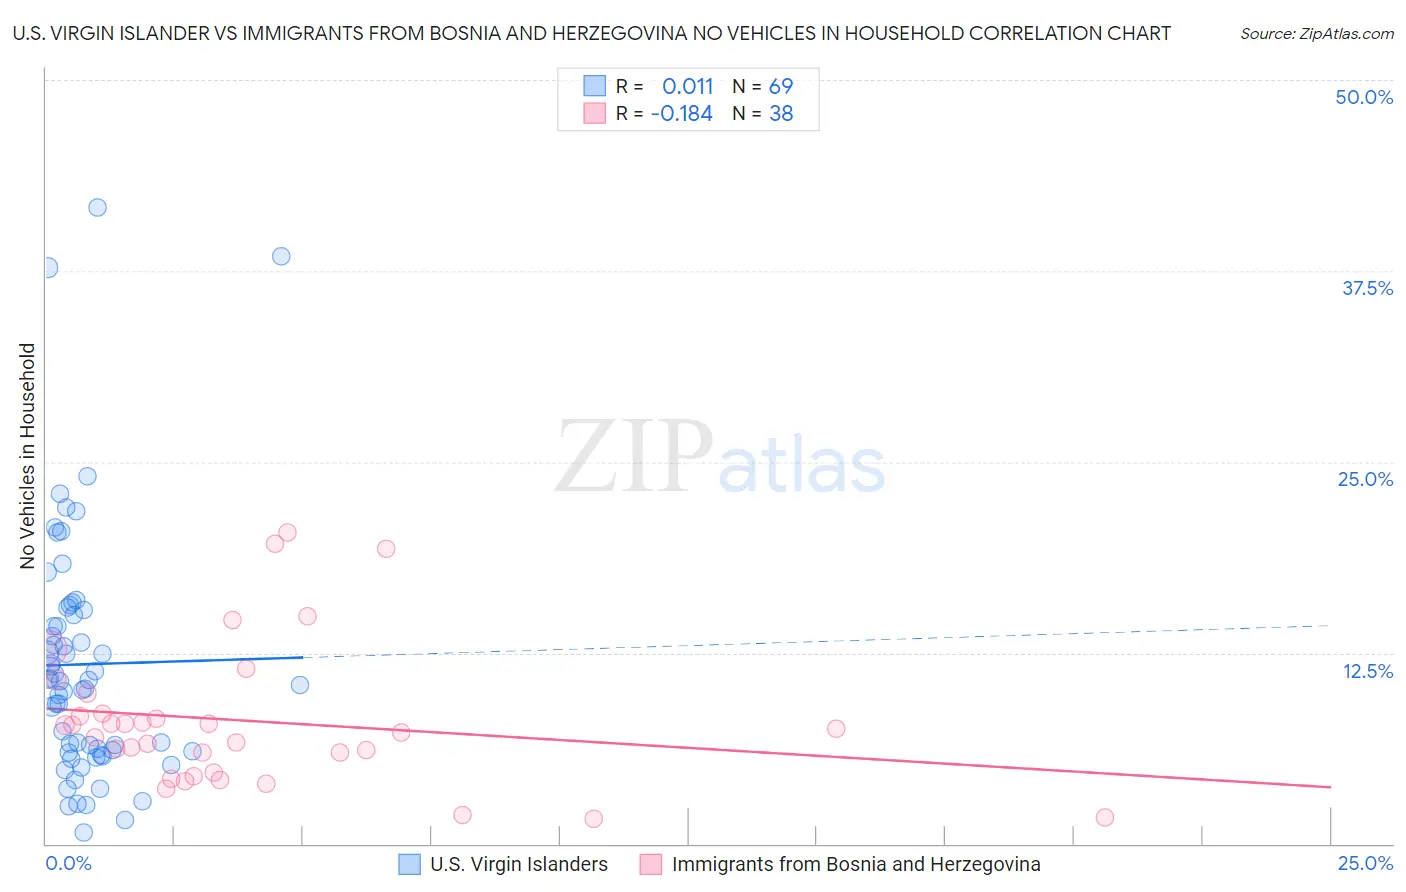 U.S. Virgin Islander vs Immigrants from Bosnia and Herzegovina No Vehicles in Household